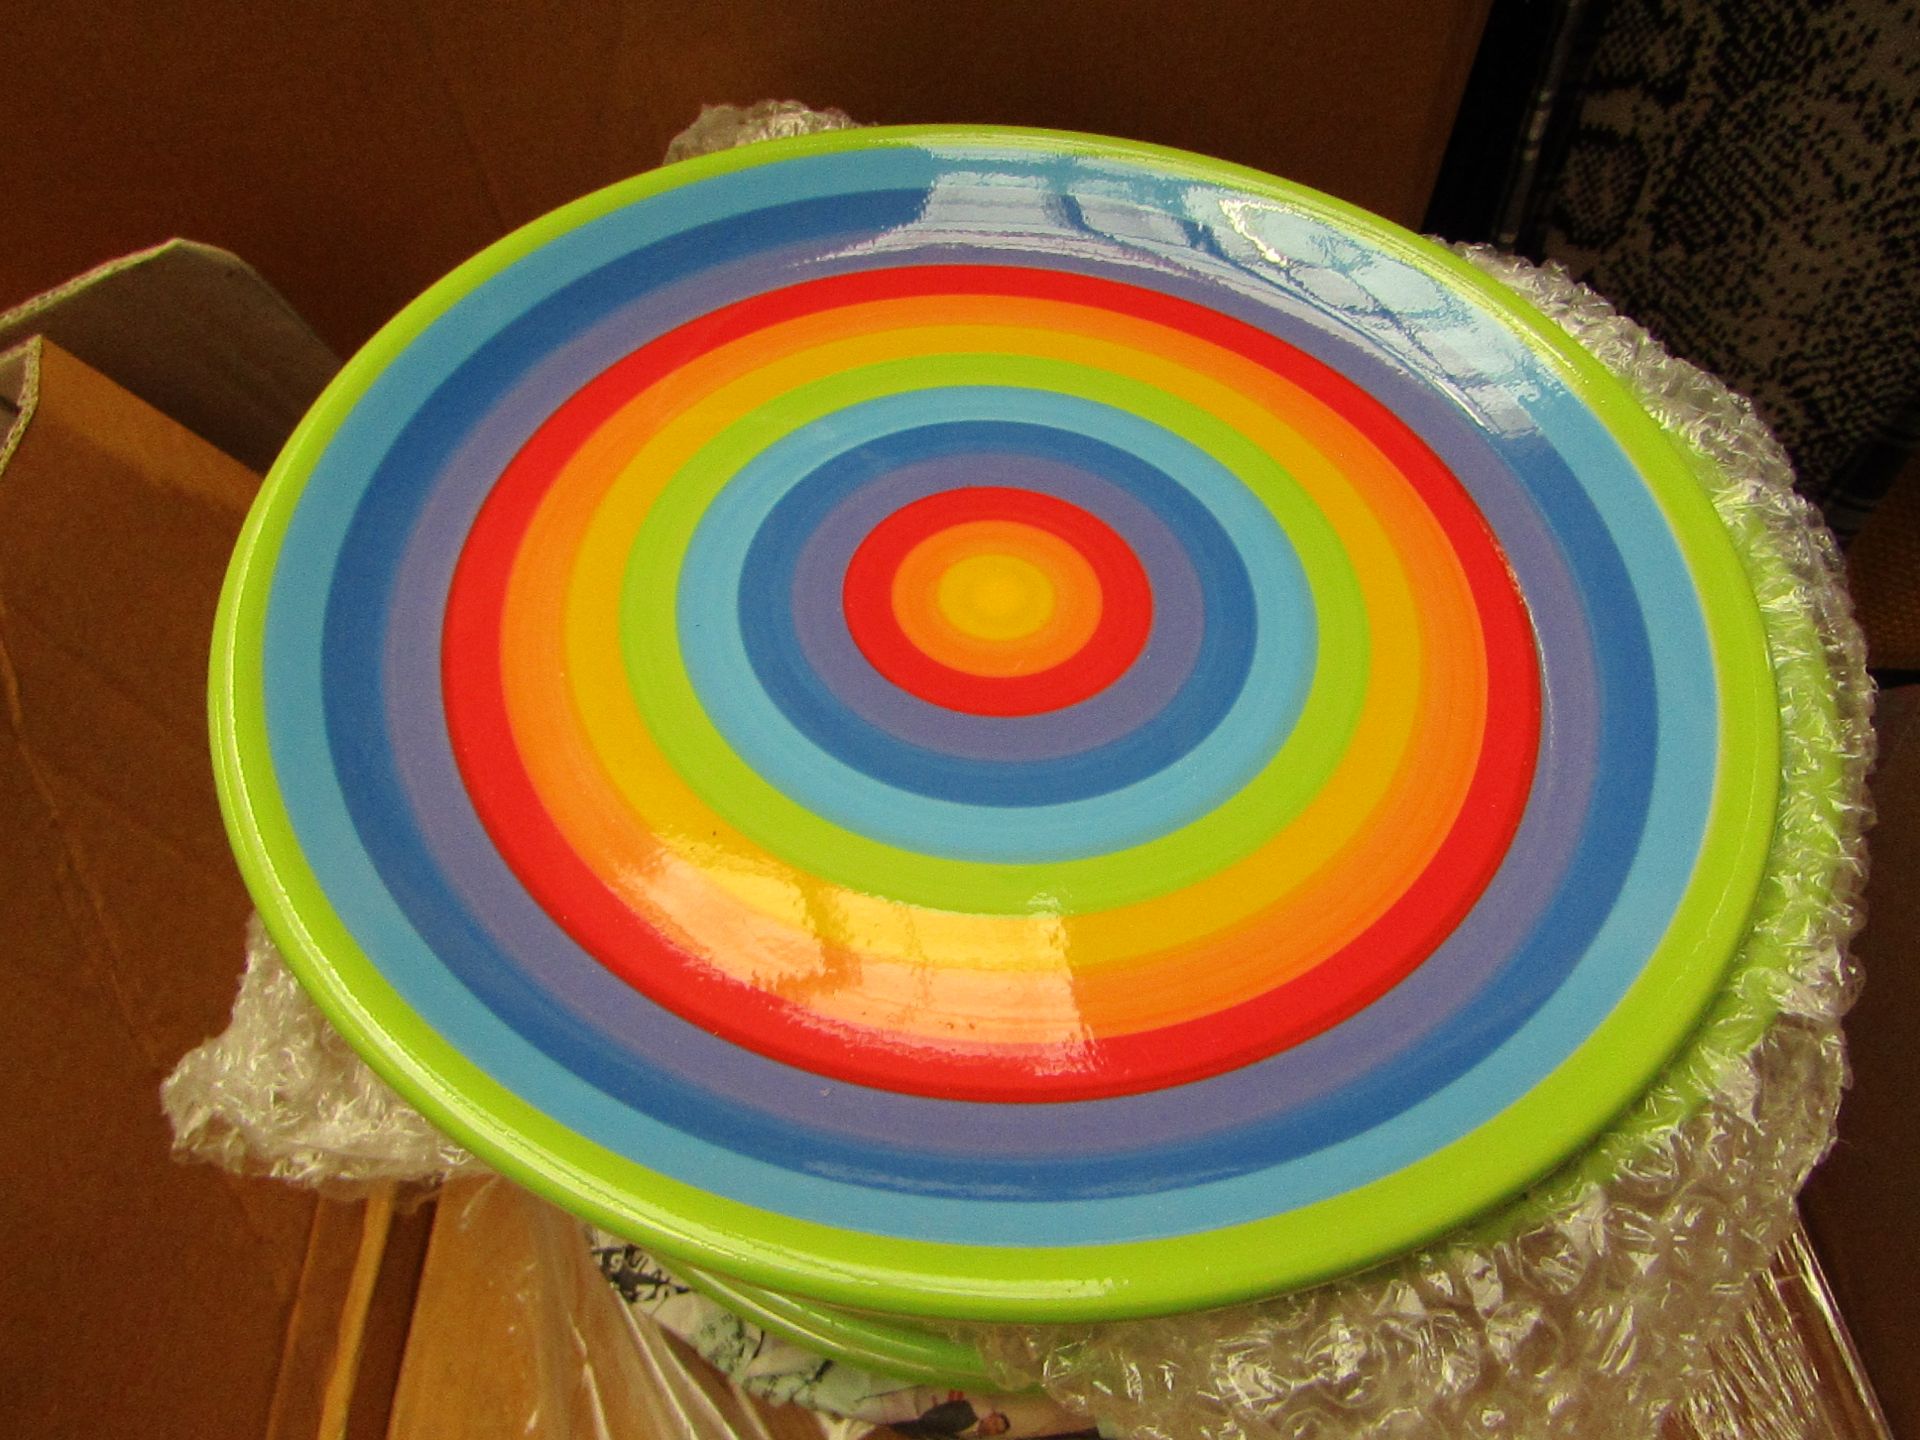 8 x Large Rainbow Plates new